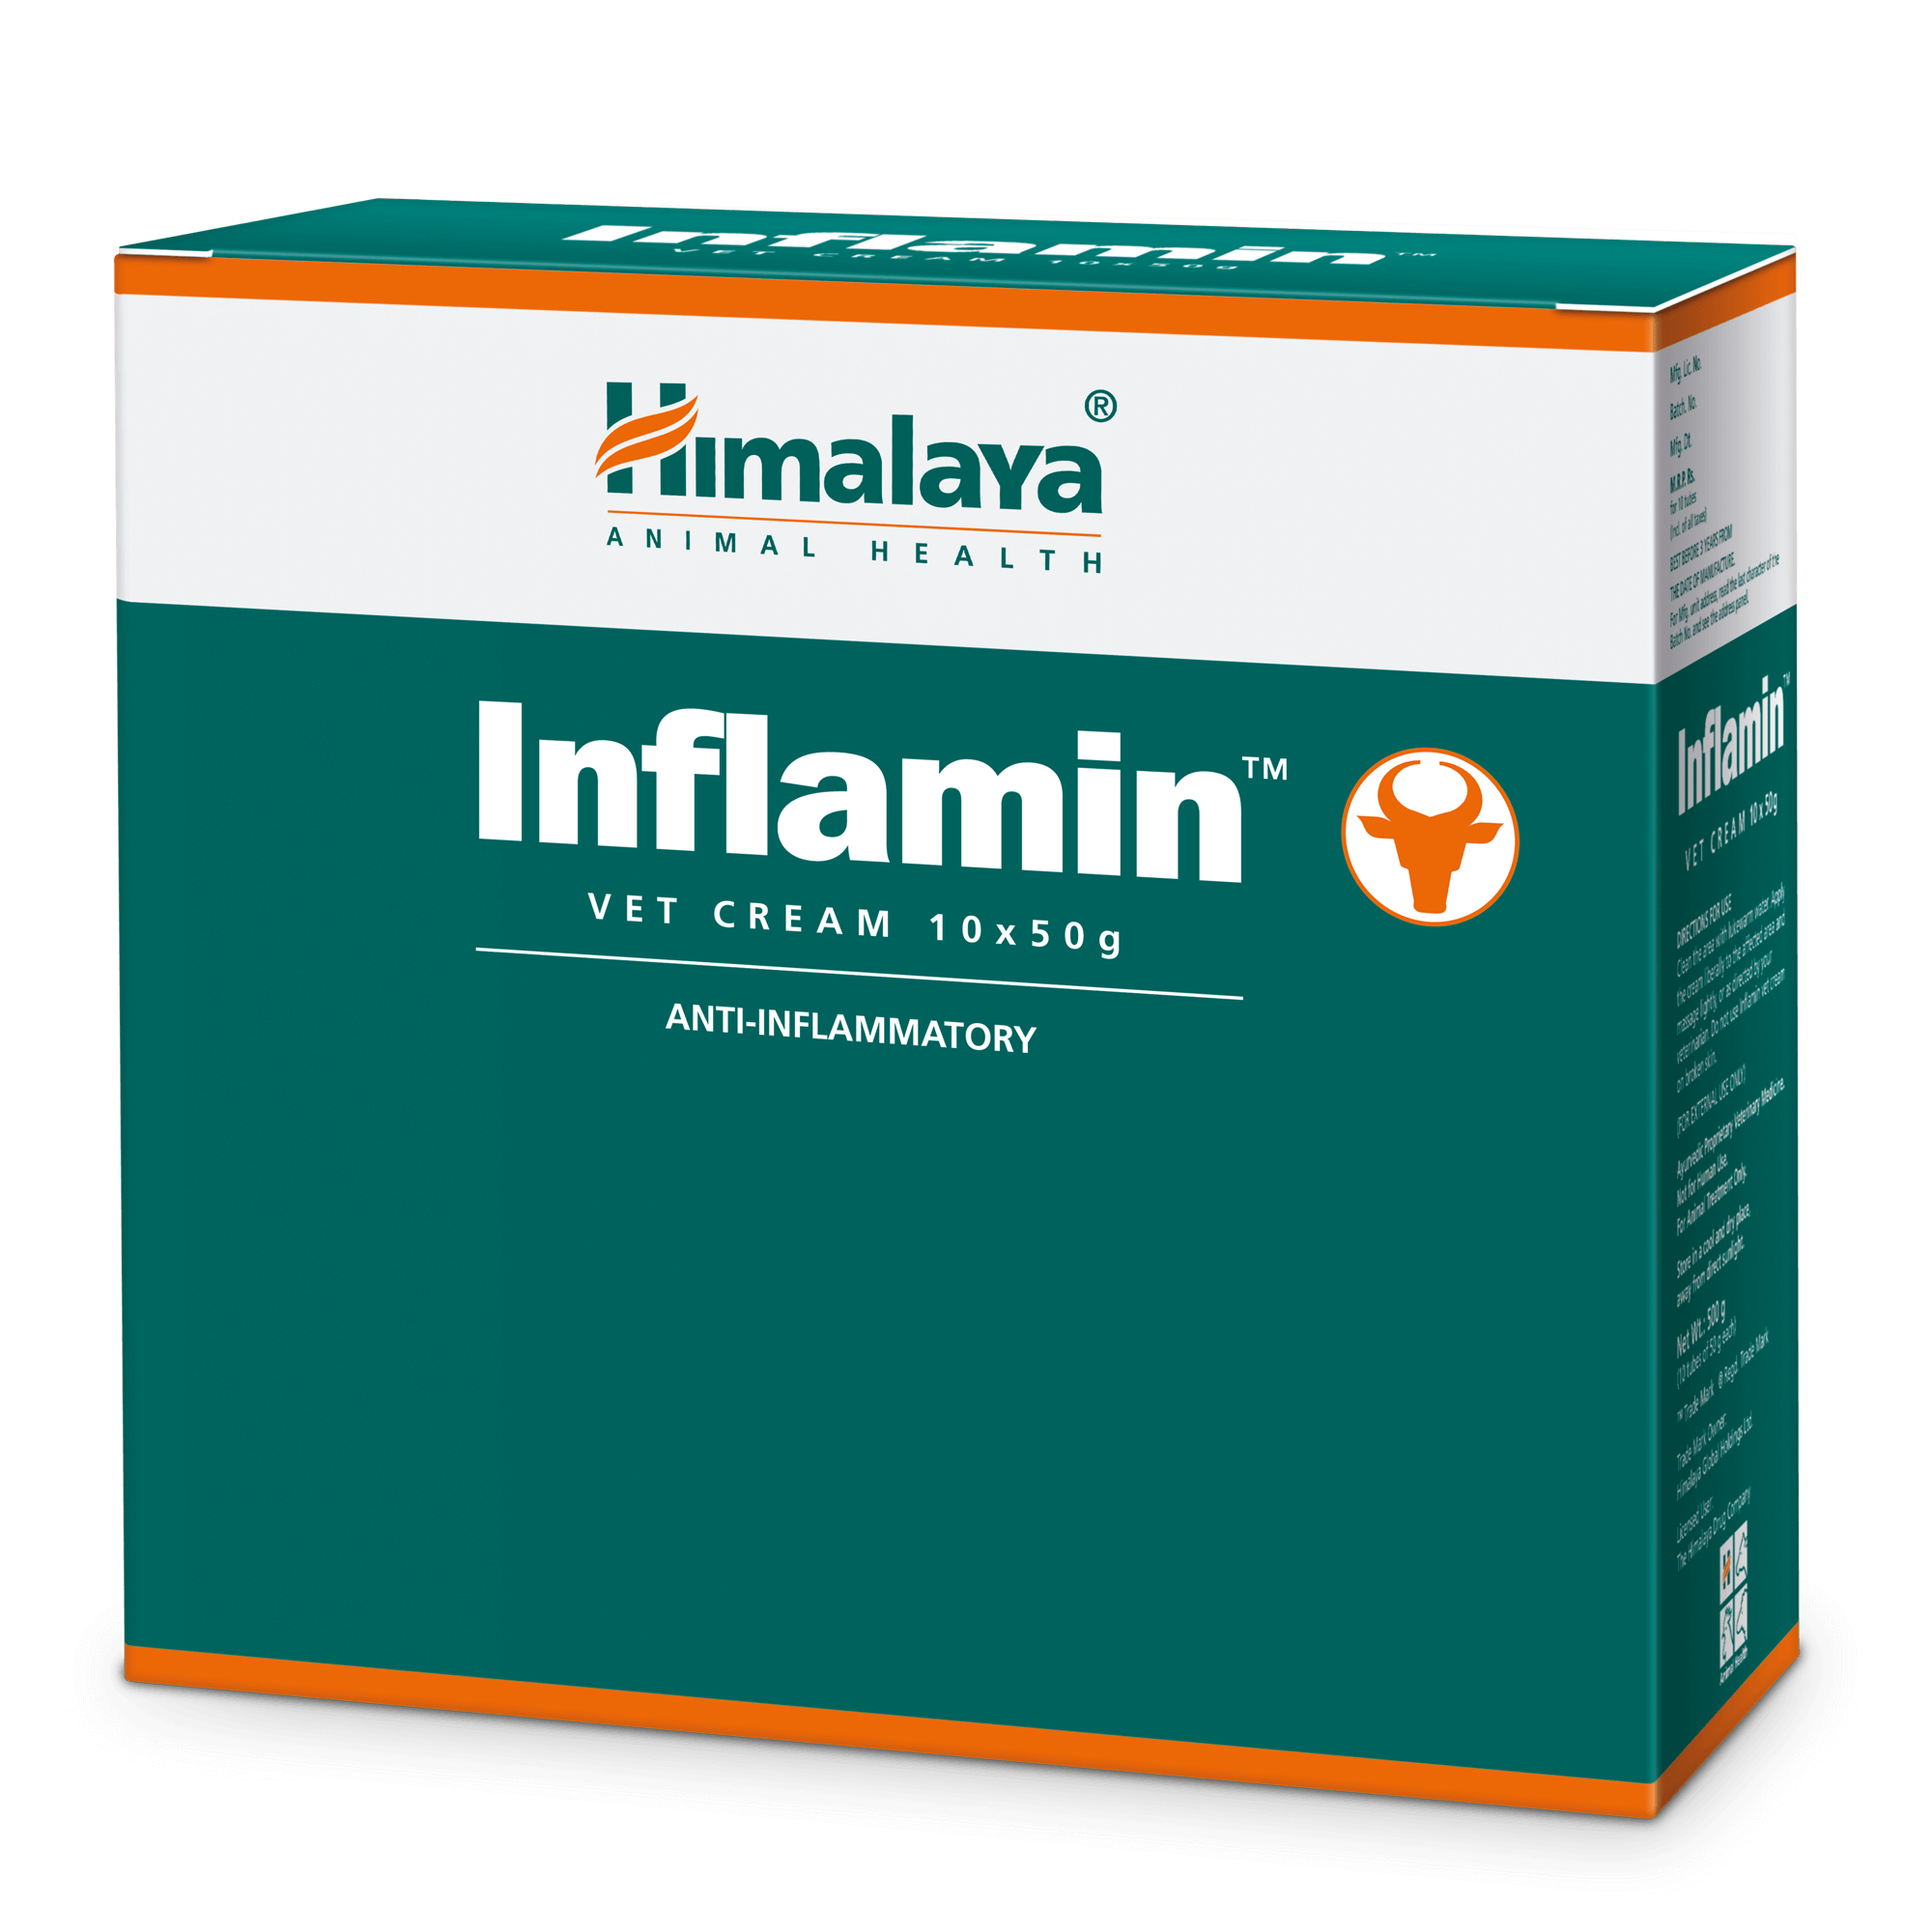 Himalaya Inflamin - Topical Anti-inflammatory Cream for Mastitis